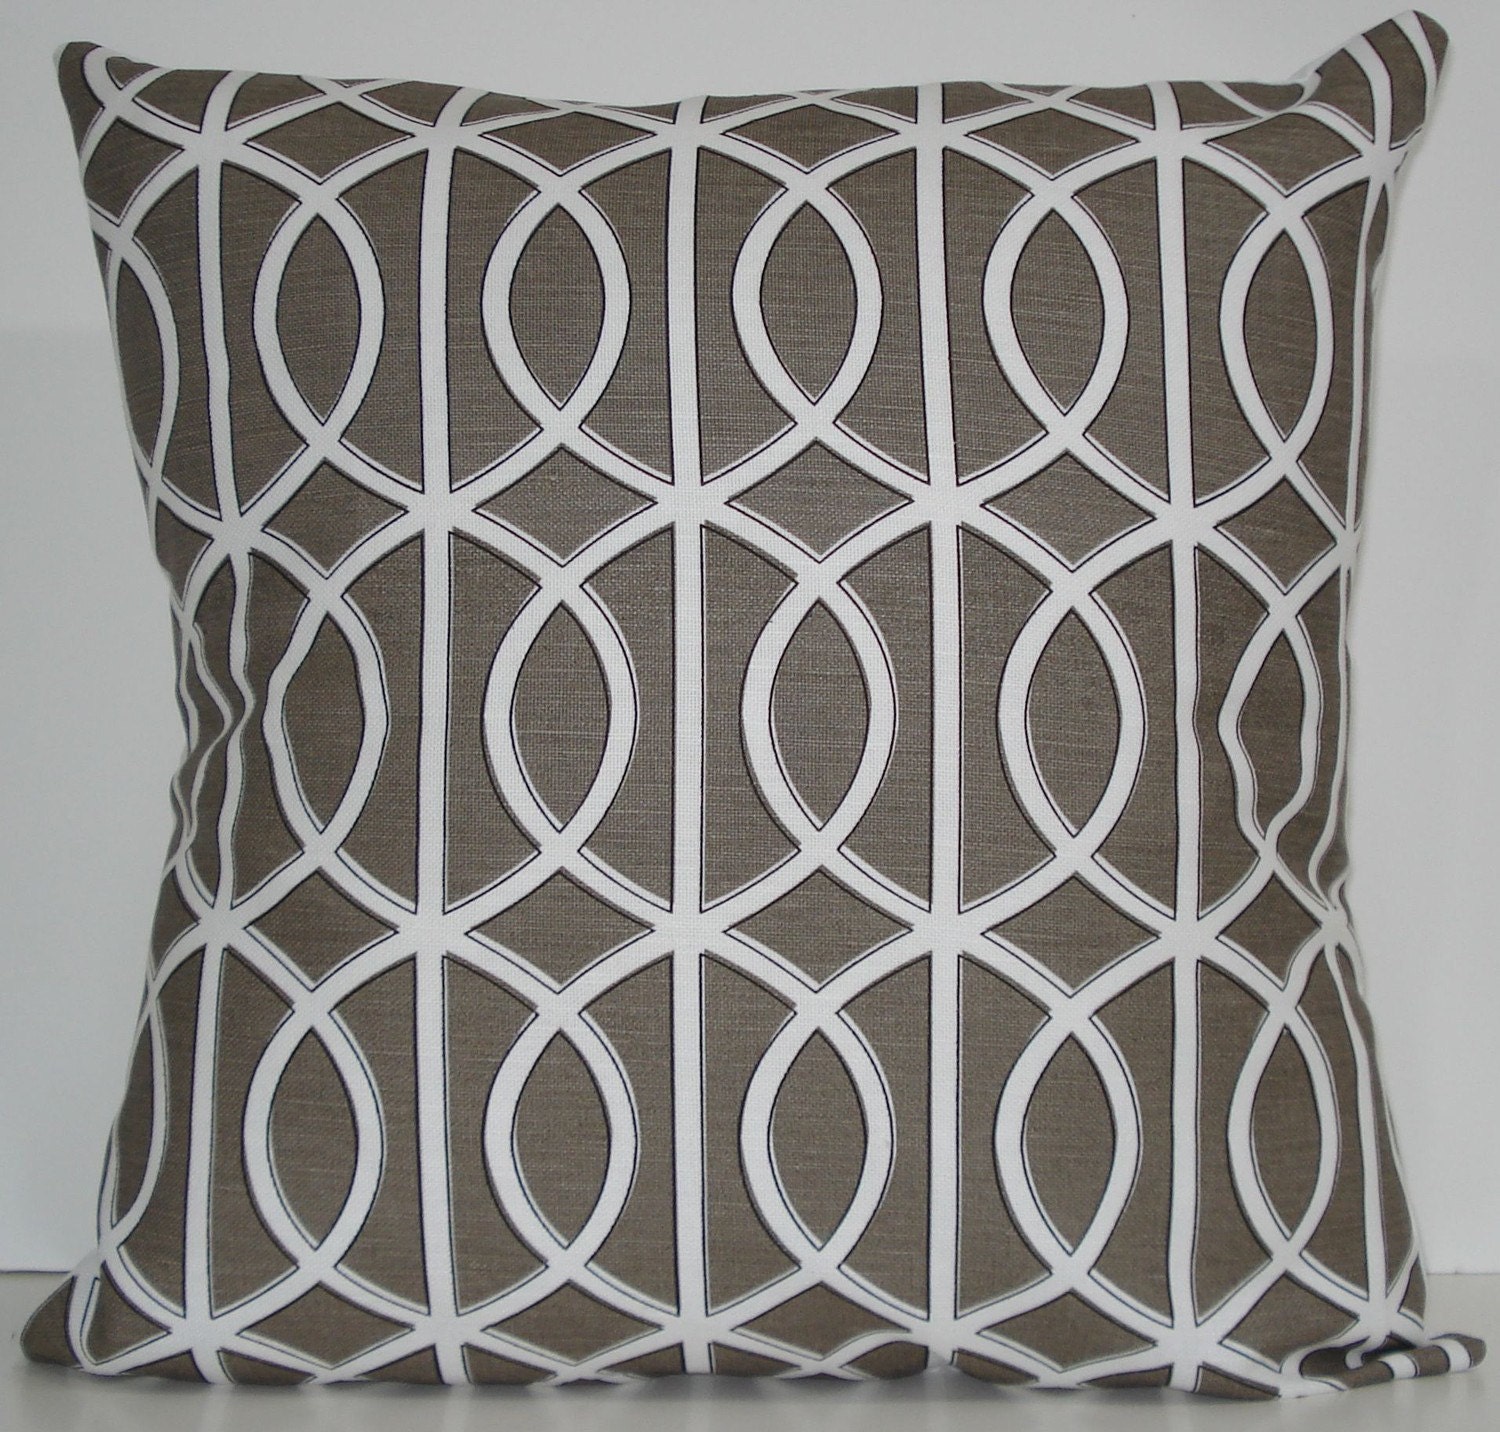 New 18x18 inch Designer Handmade Pillow Cases. Dwell Studio. lattice, trellis, link. warm grey